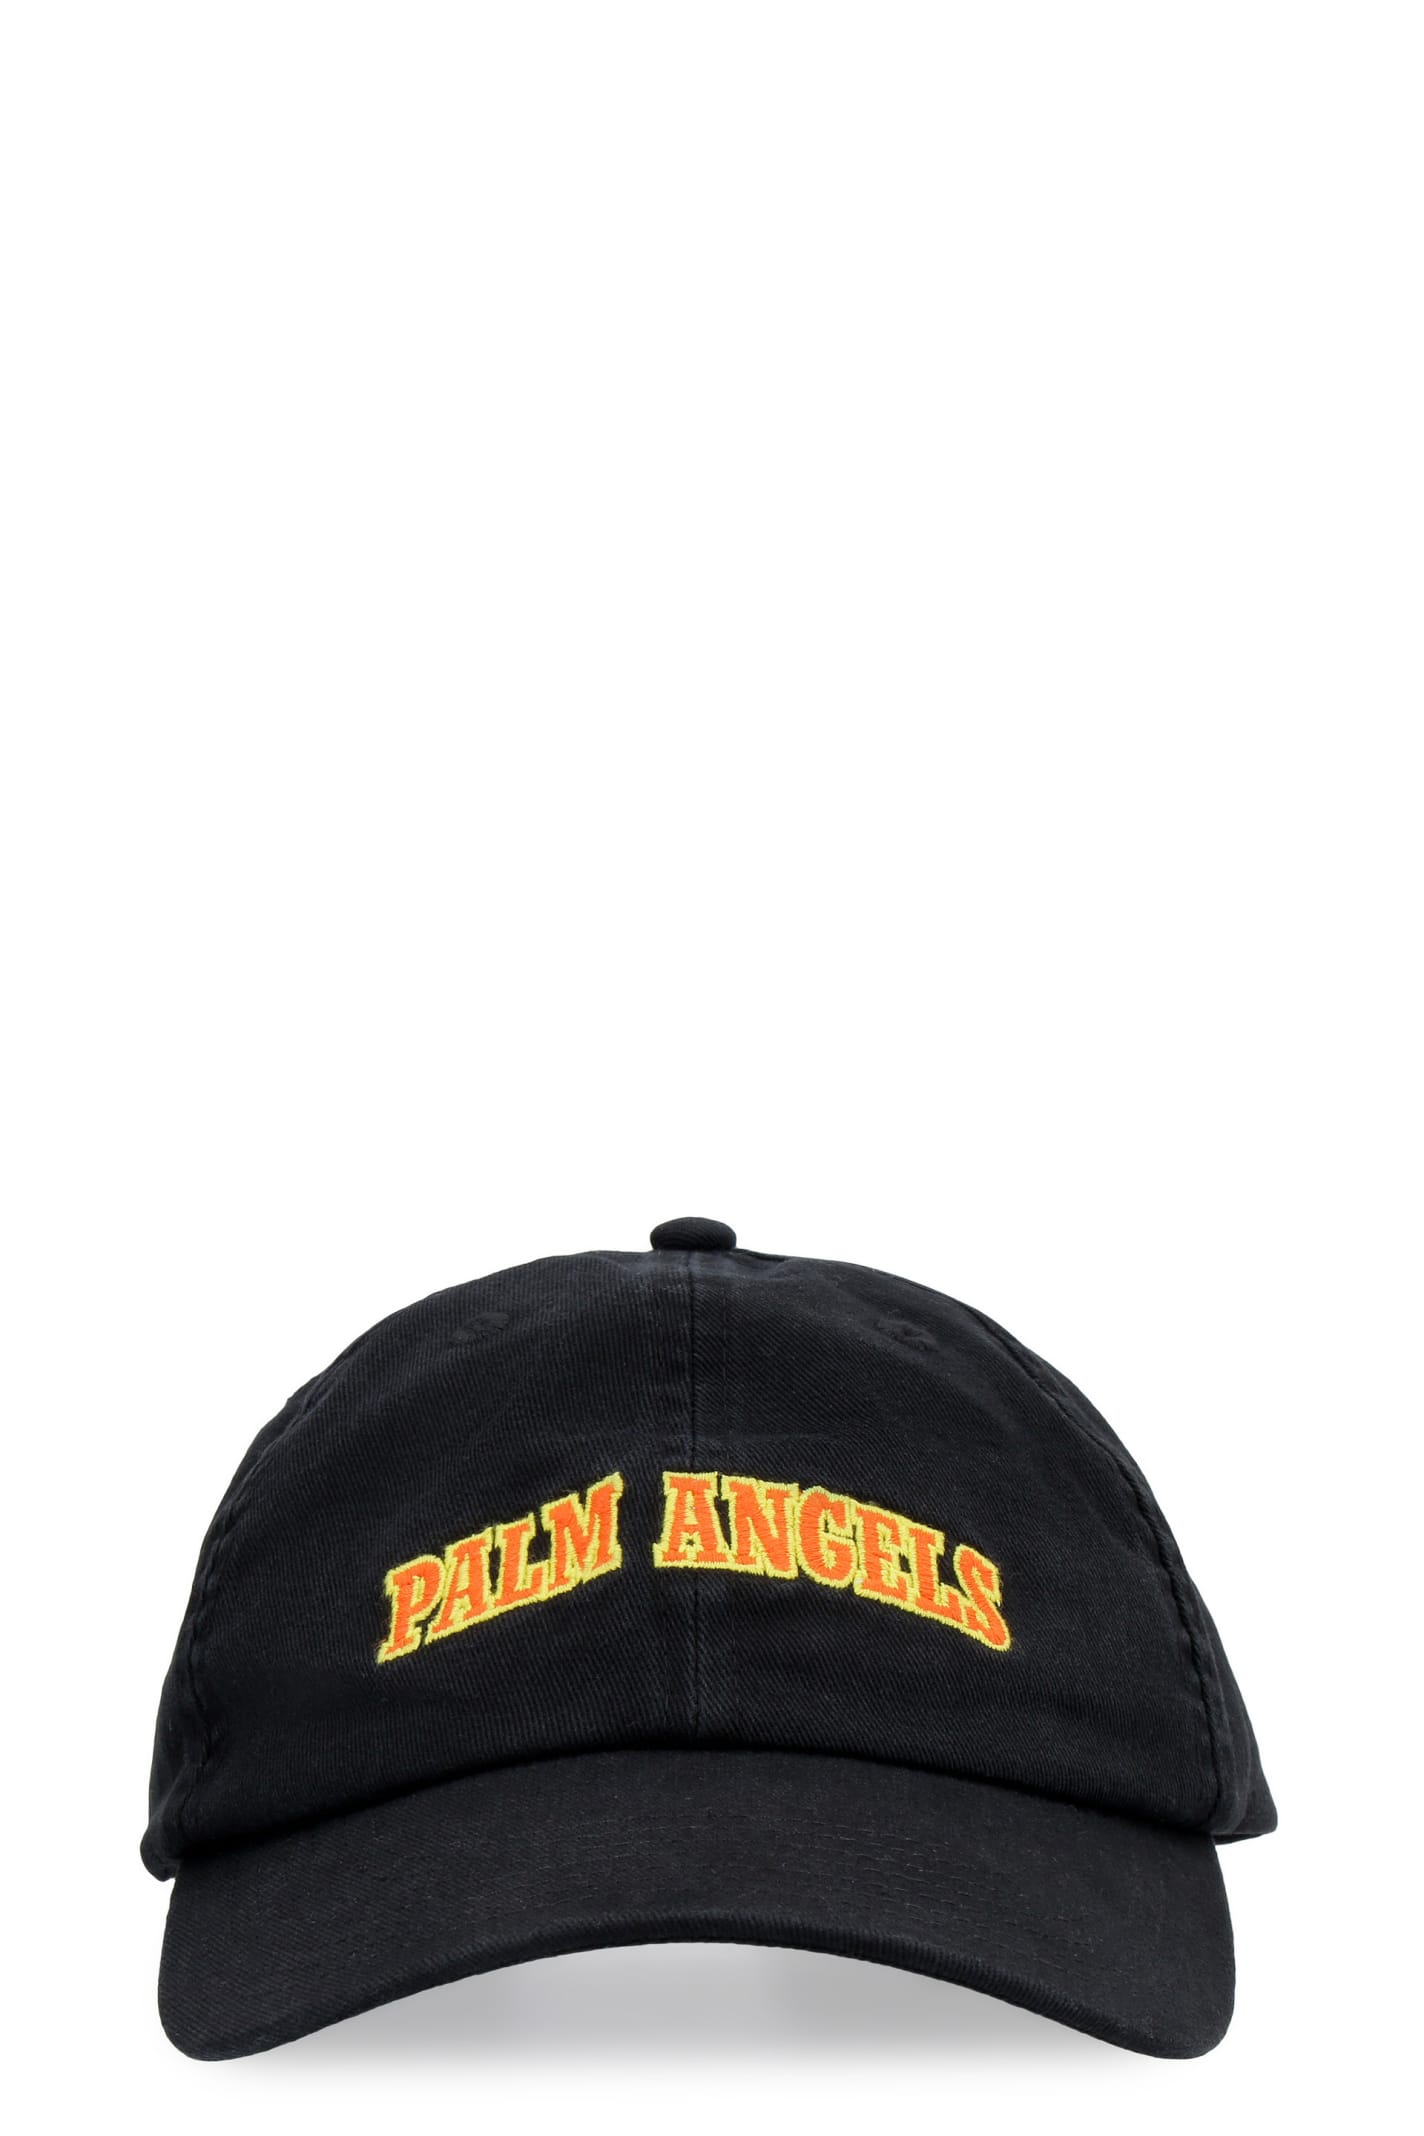 PALM ANGELS LOGO EMBROIDERY BASEBALL CAP,11198448